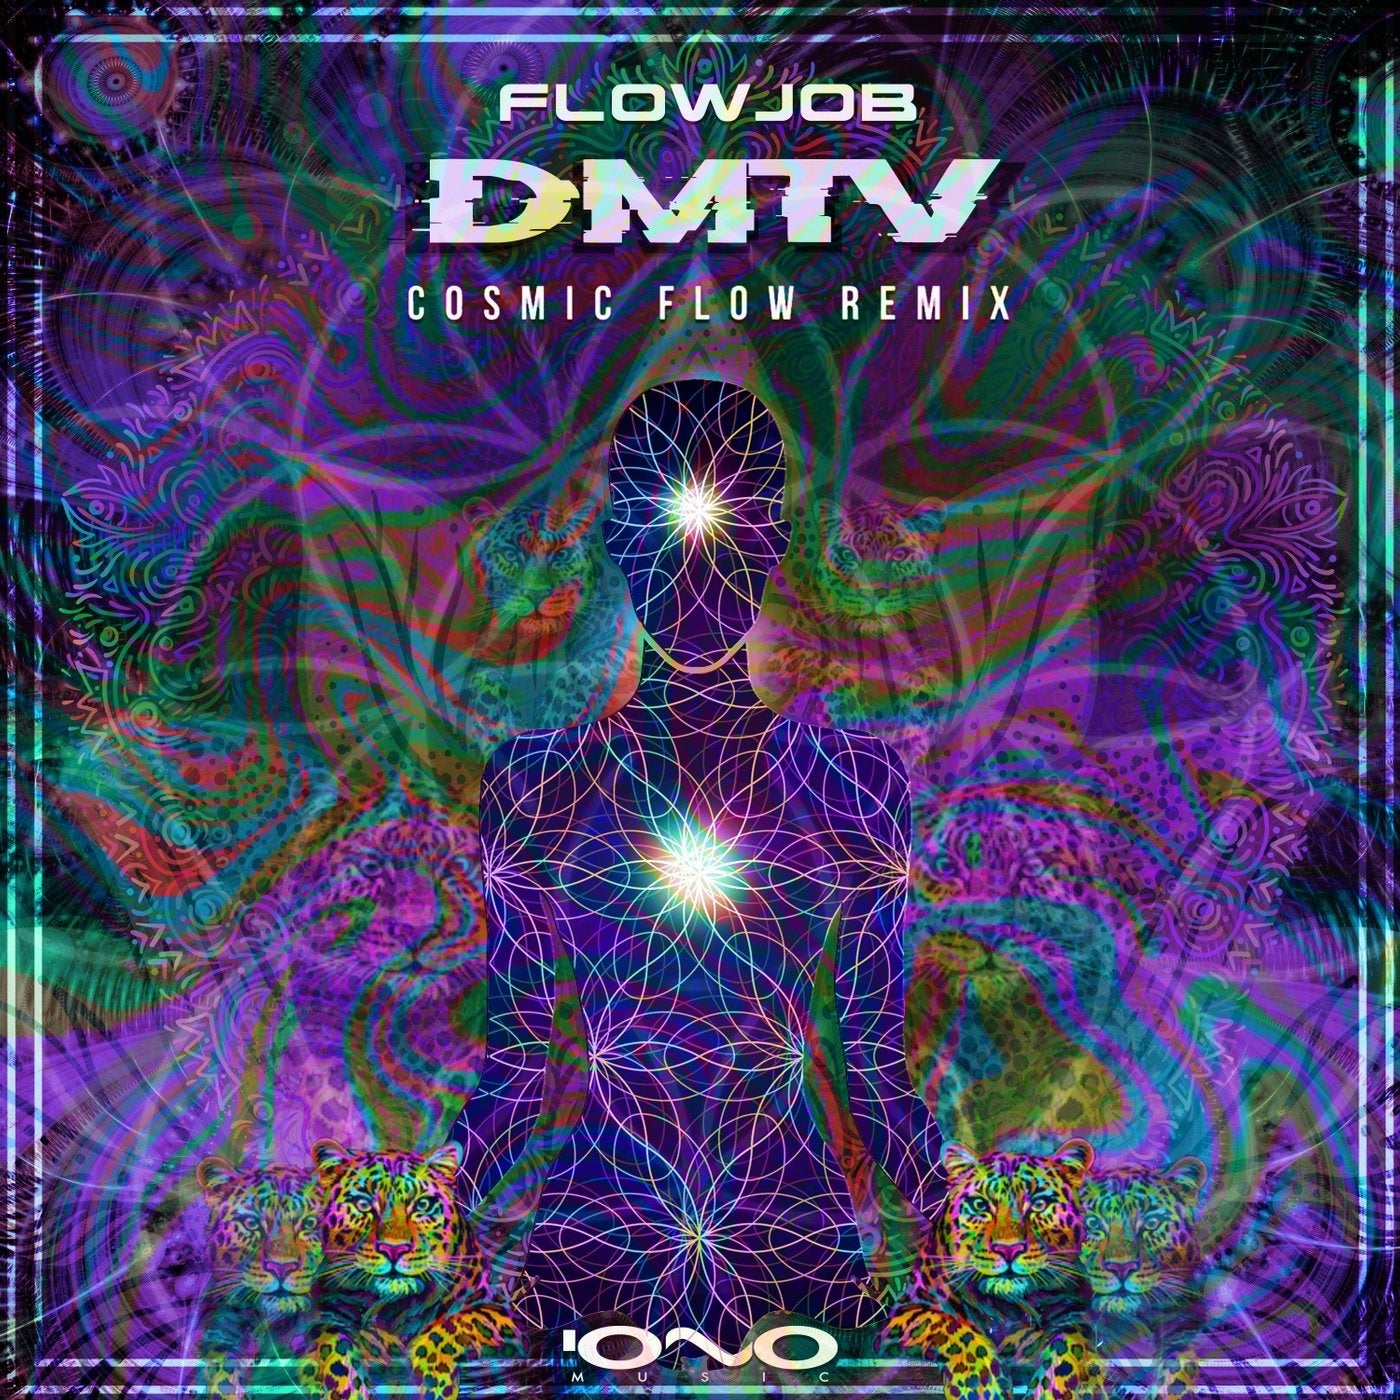 Dmtv (Cosmic Flow Remix)